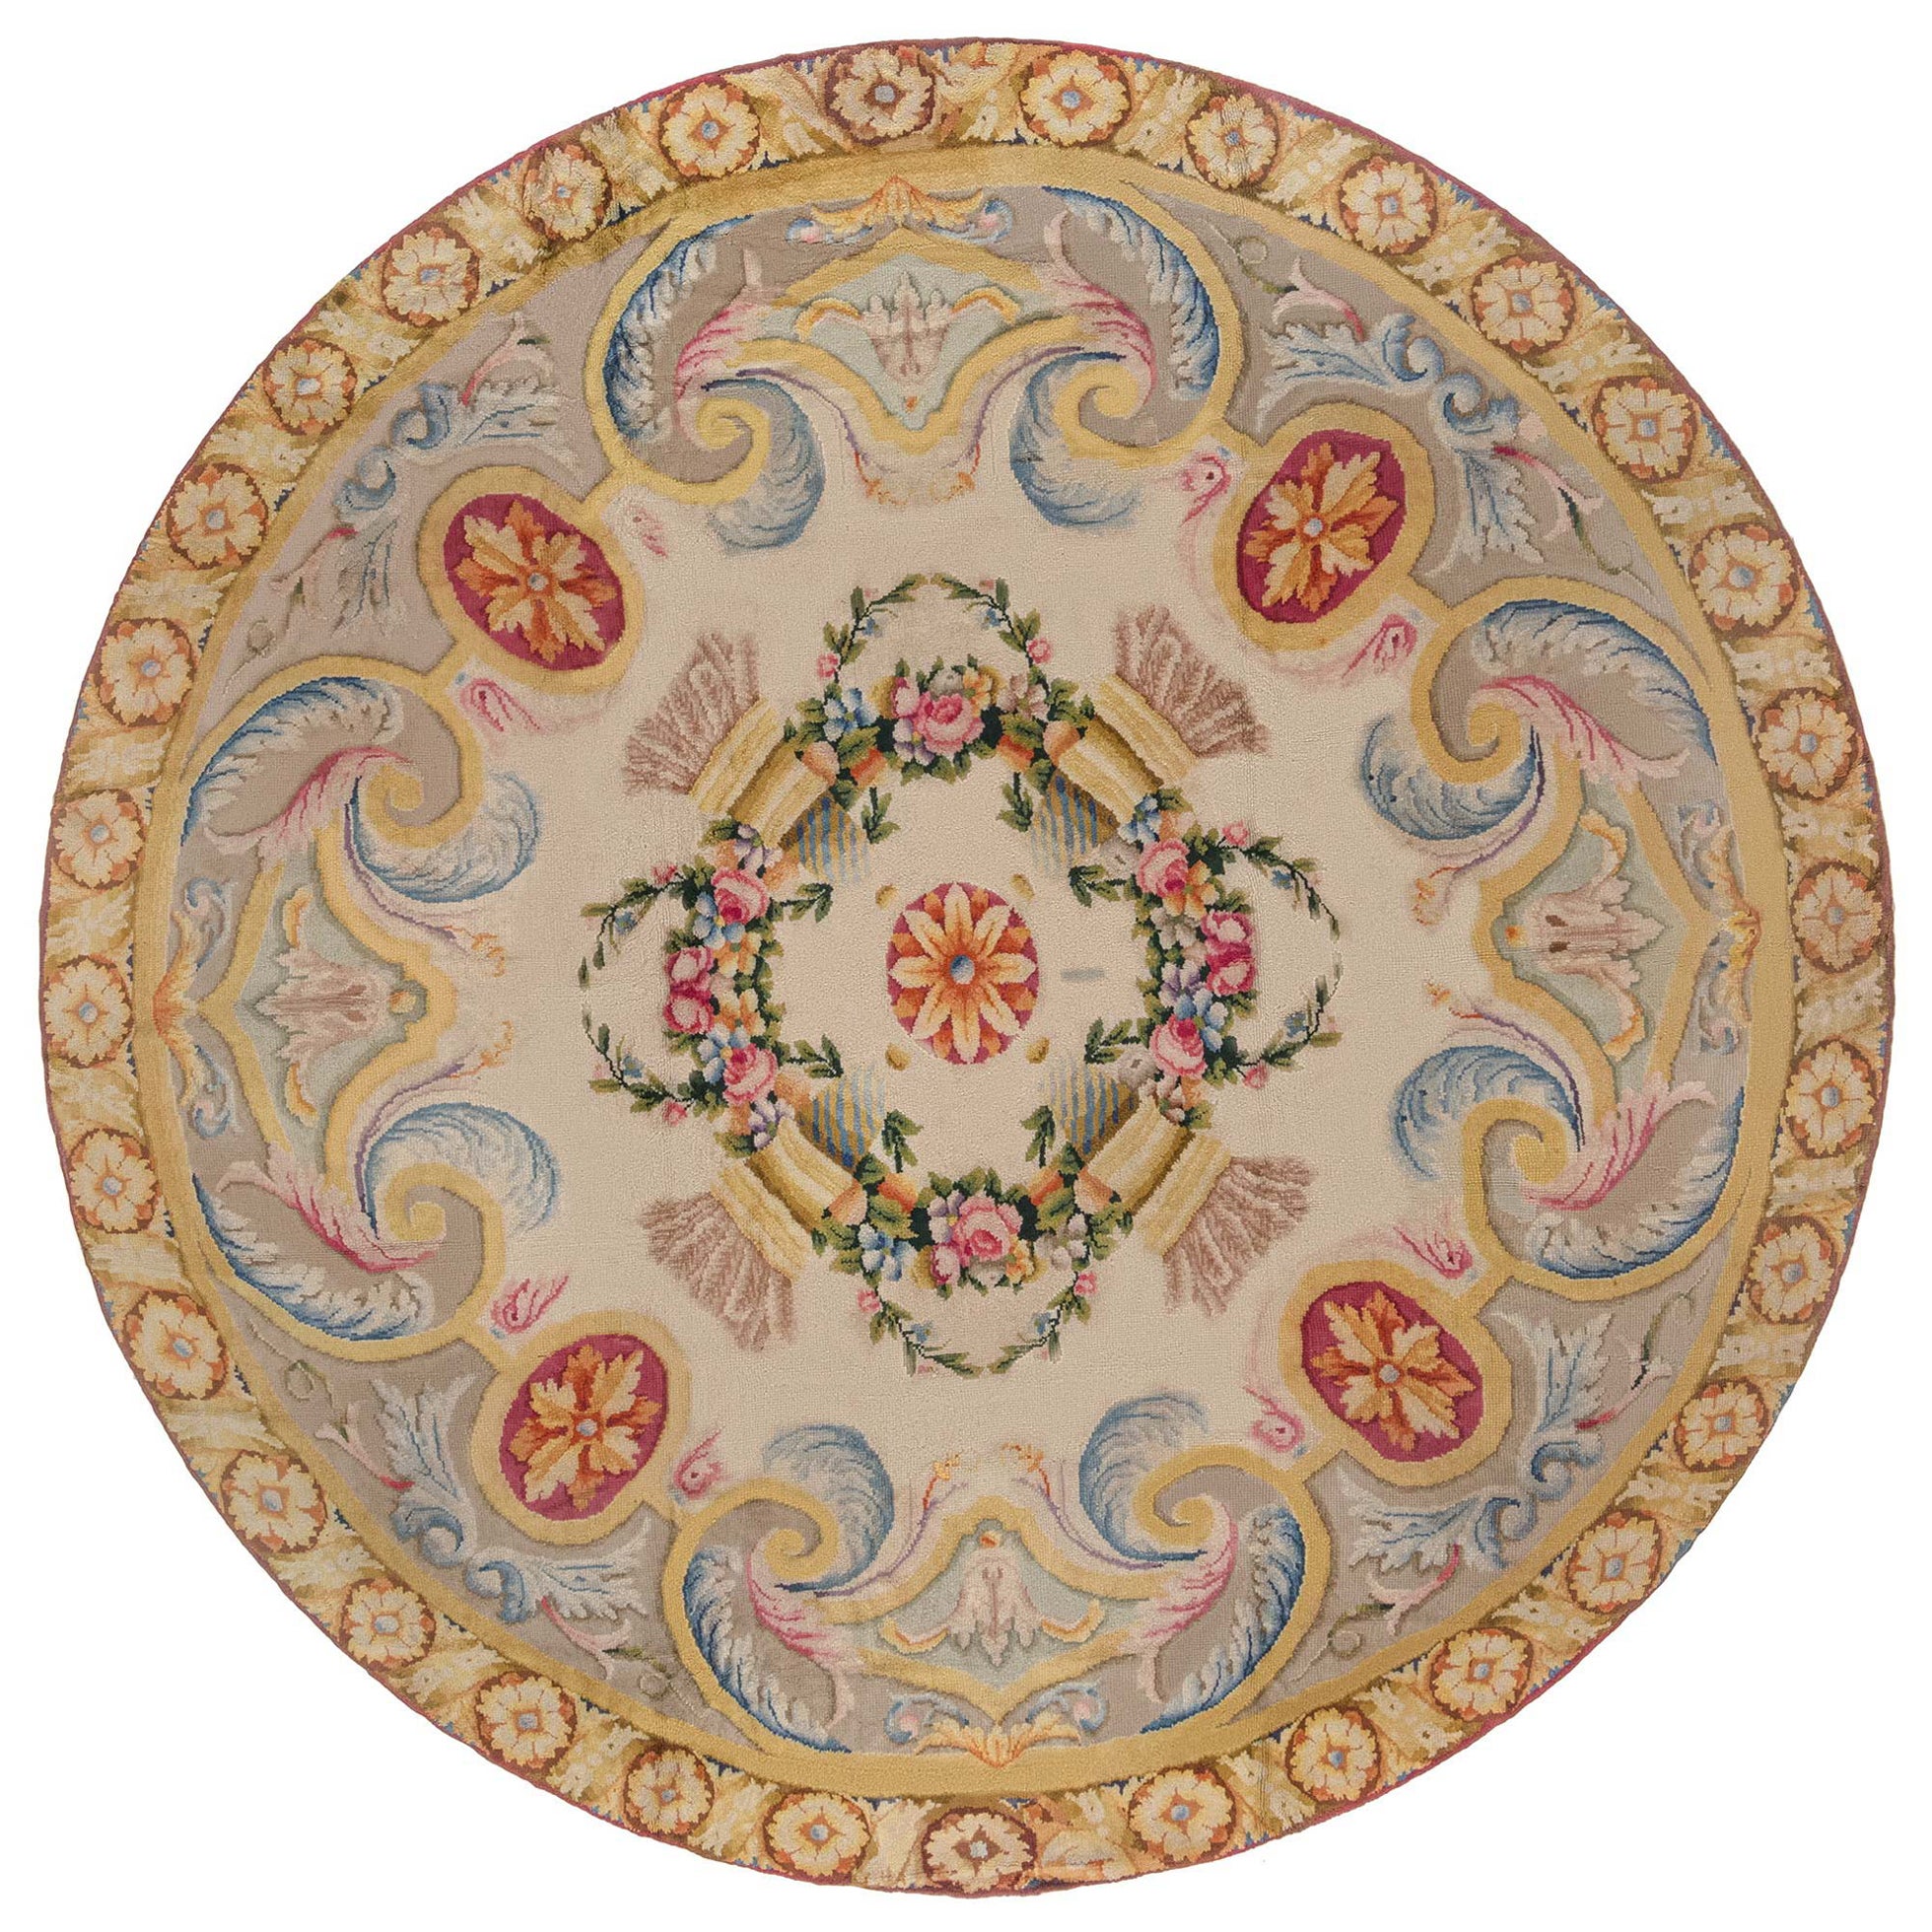 Early 20th Century Savonnerie Spanish Circular Fragmentary Rug